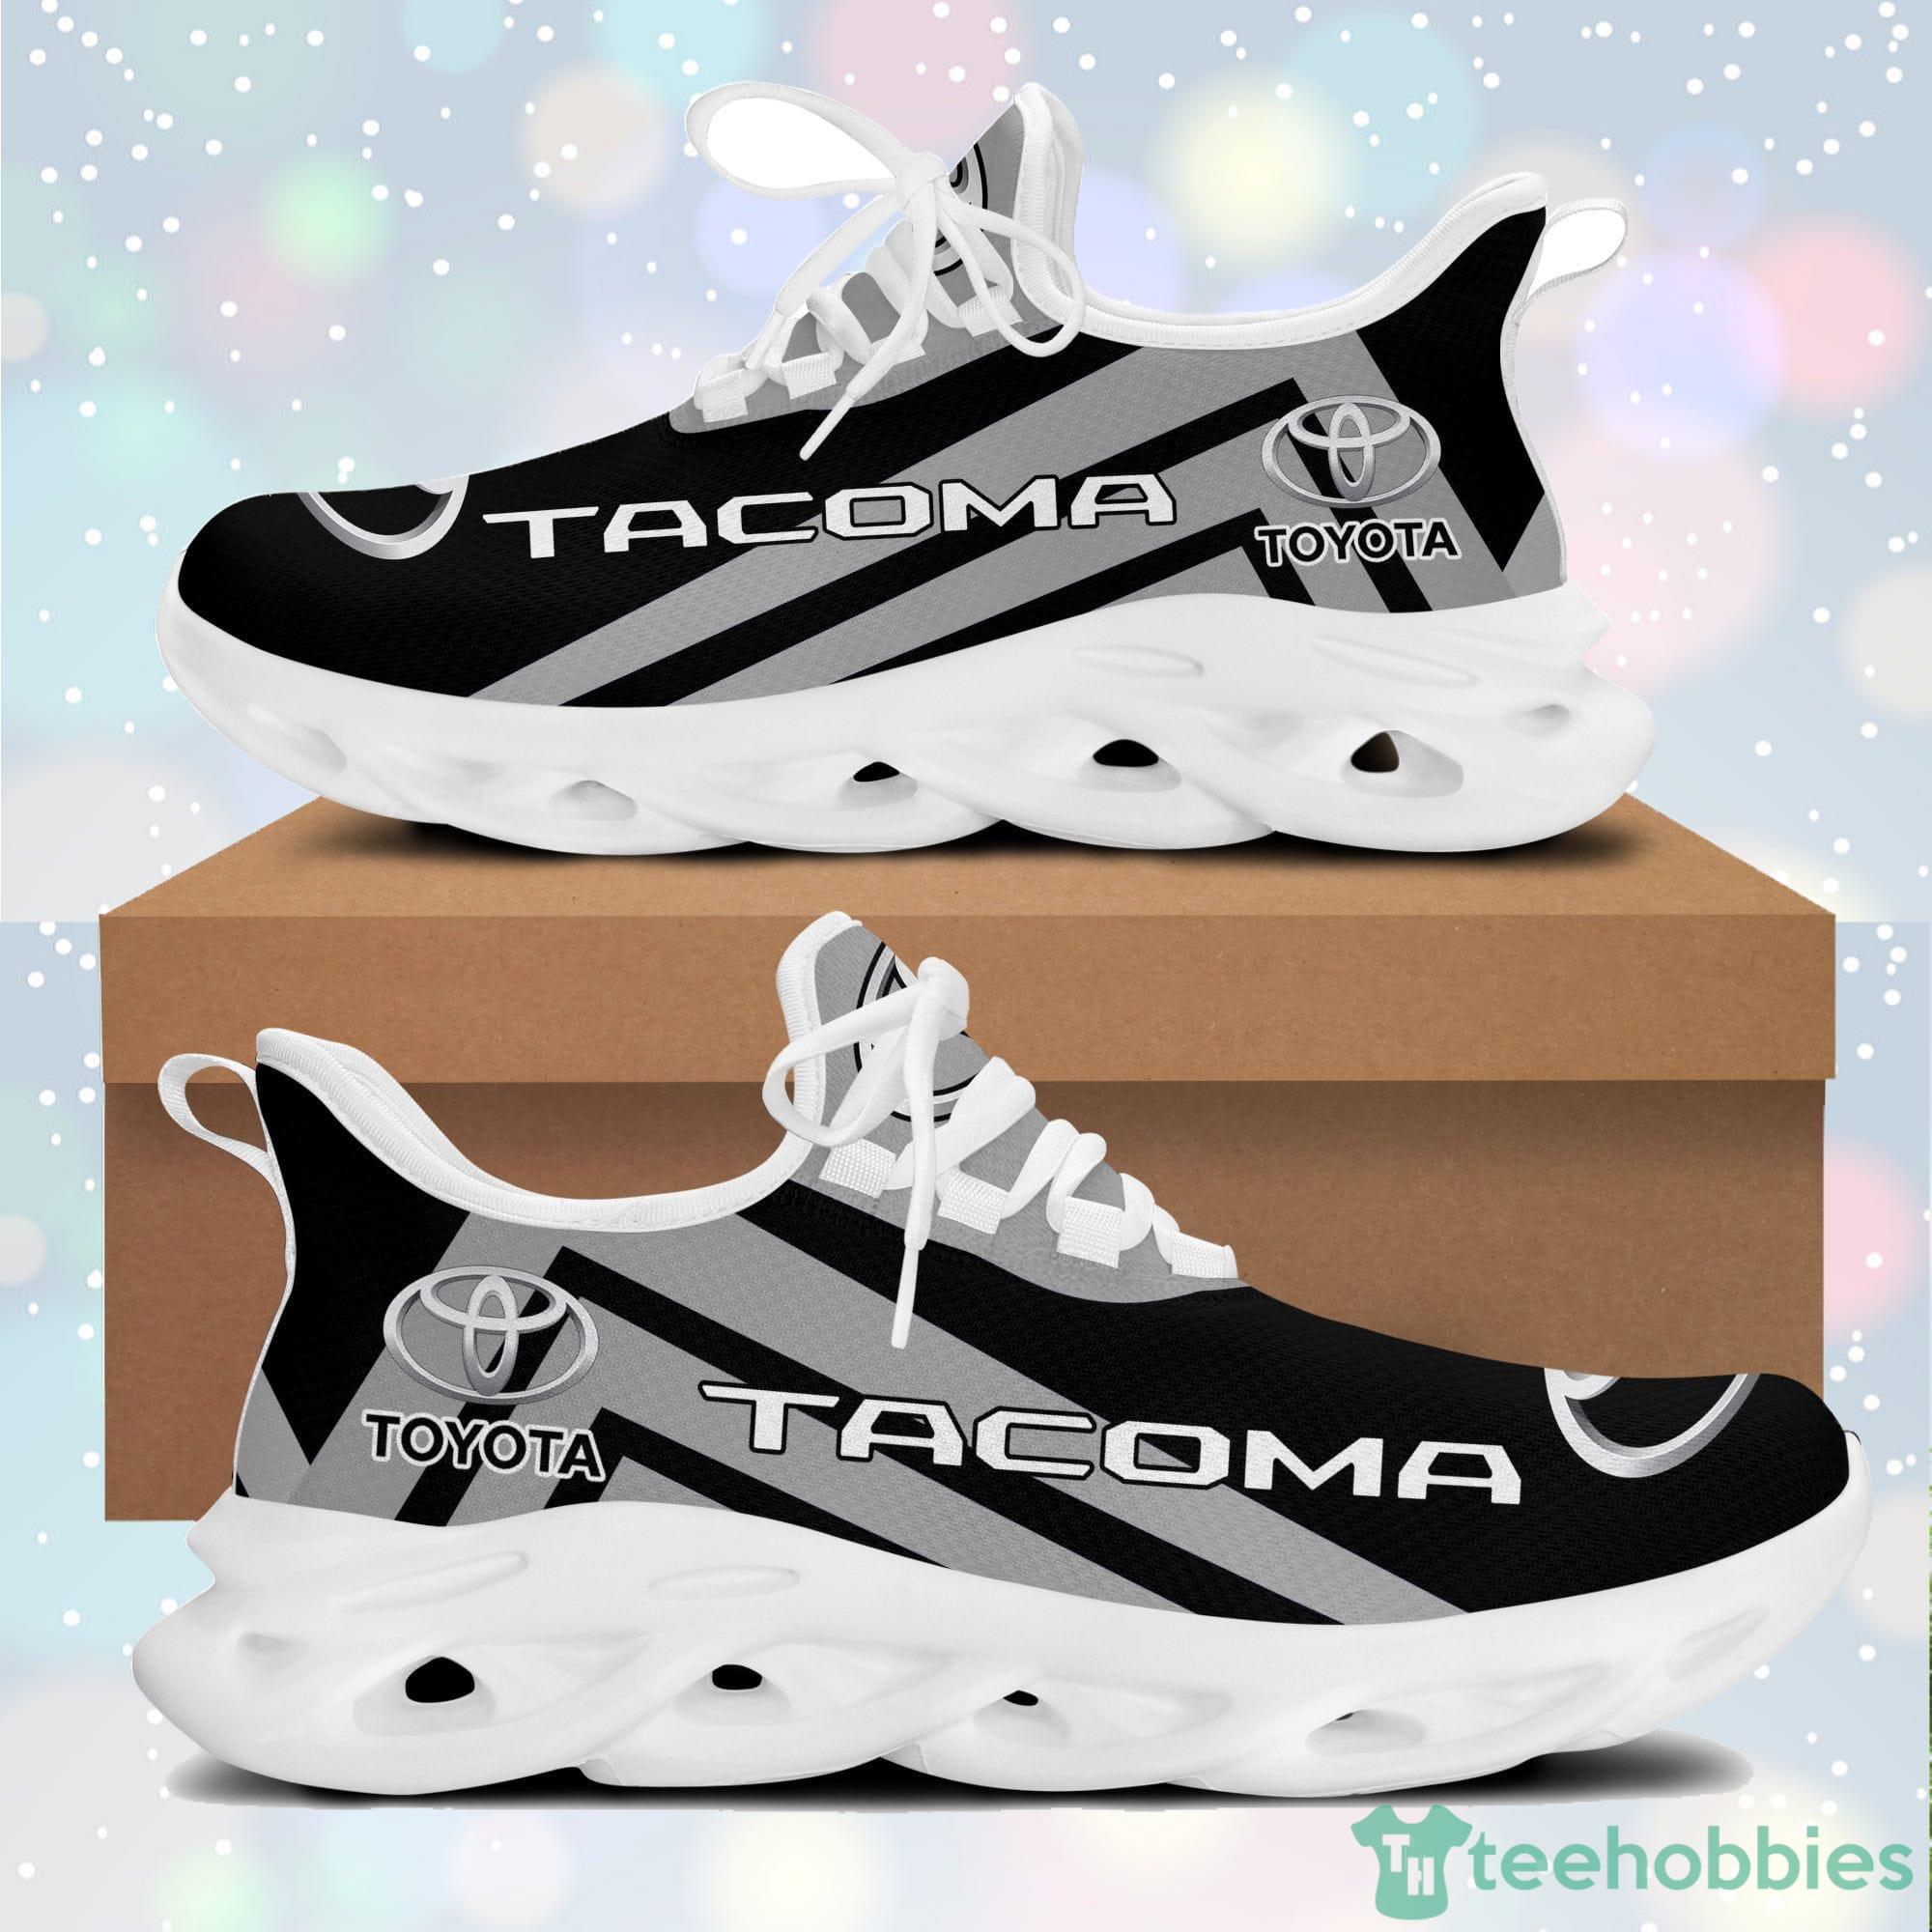 Limited Edition Toyota Tacoma Running Shoes Grey Max Soul Shoes - Banantees